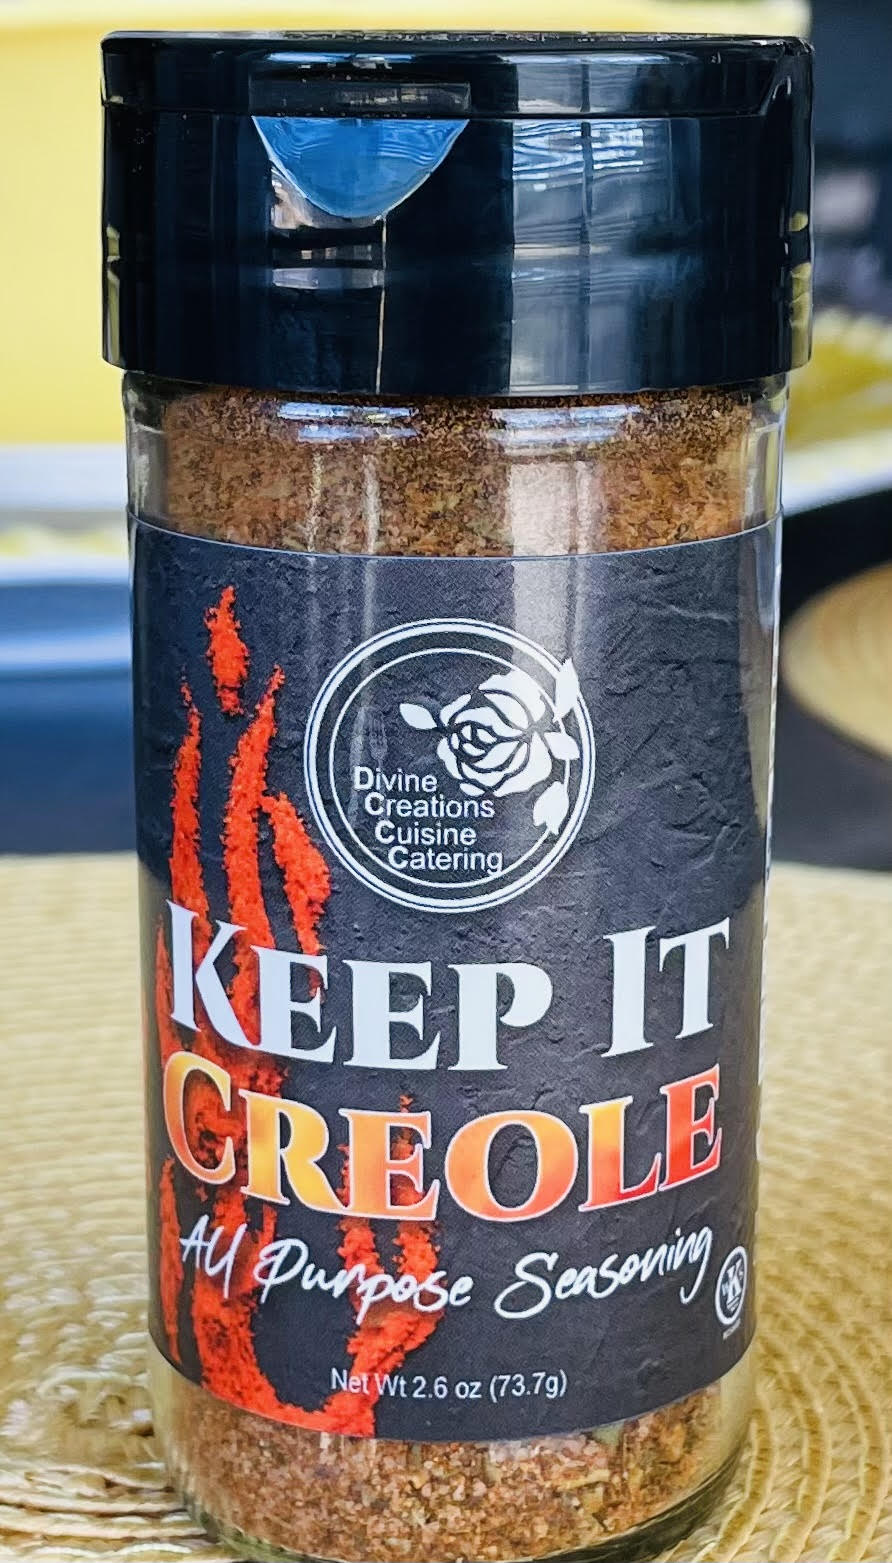 All Purpose Creole Seasoning